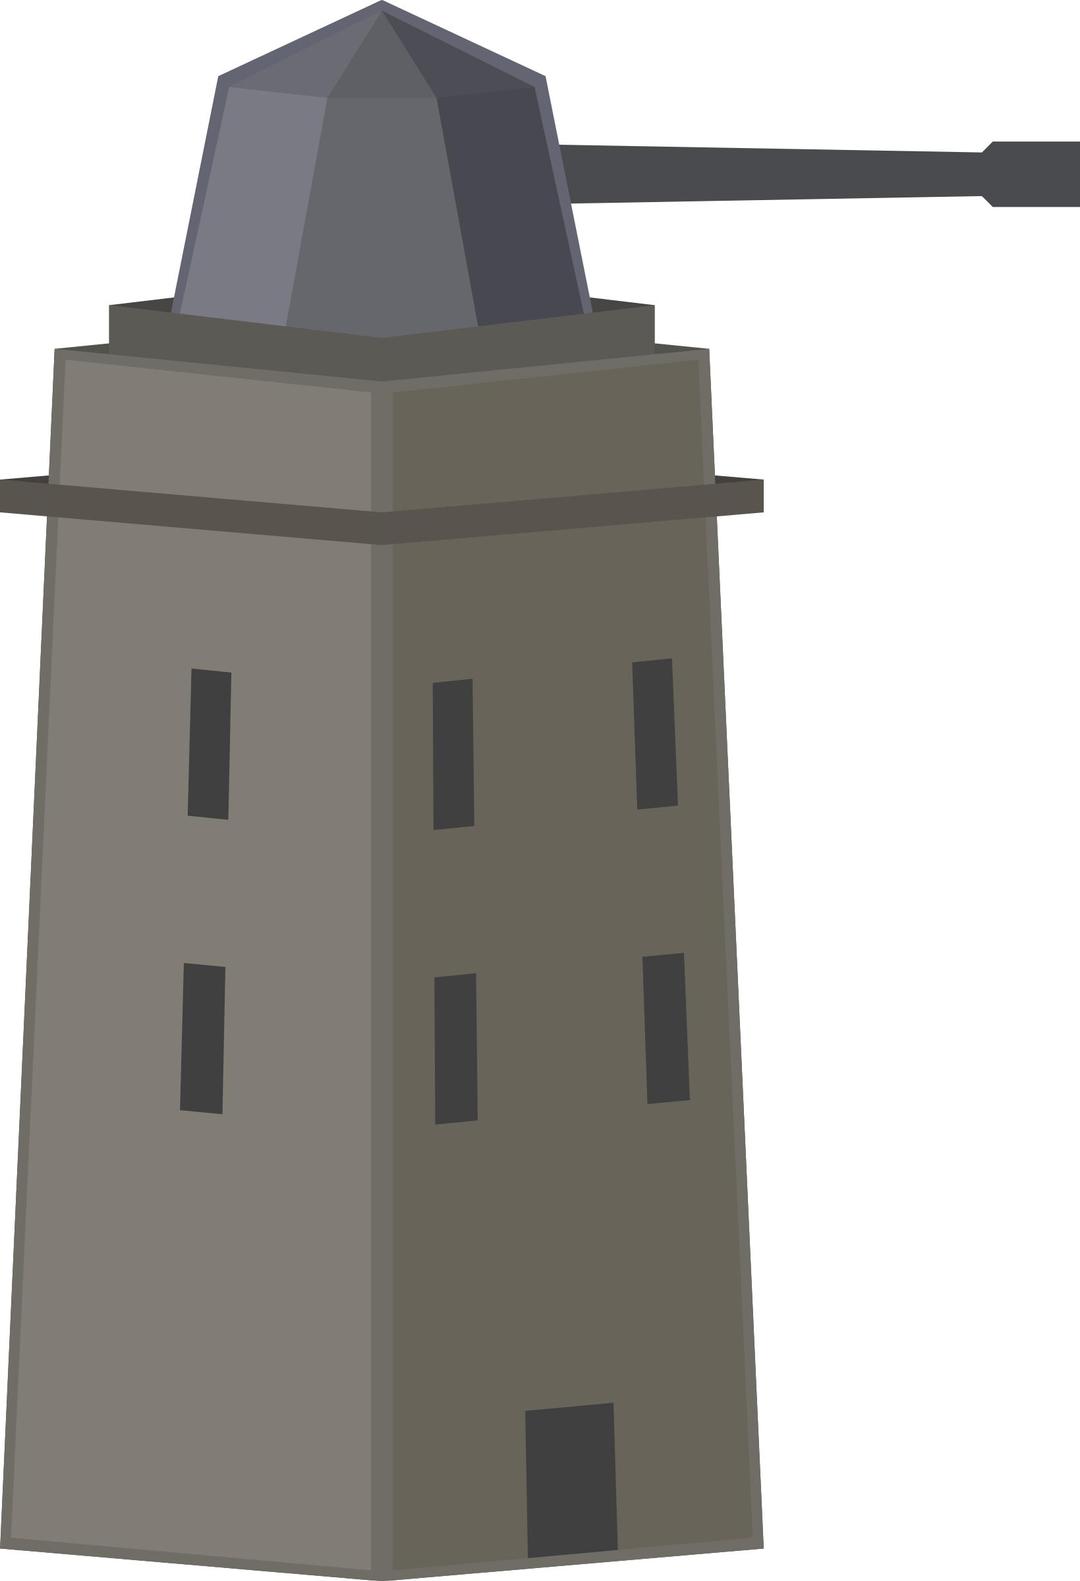 anti-air tower or turret png transparent